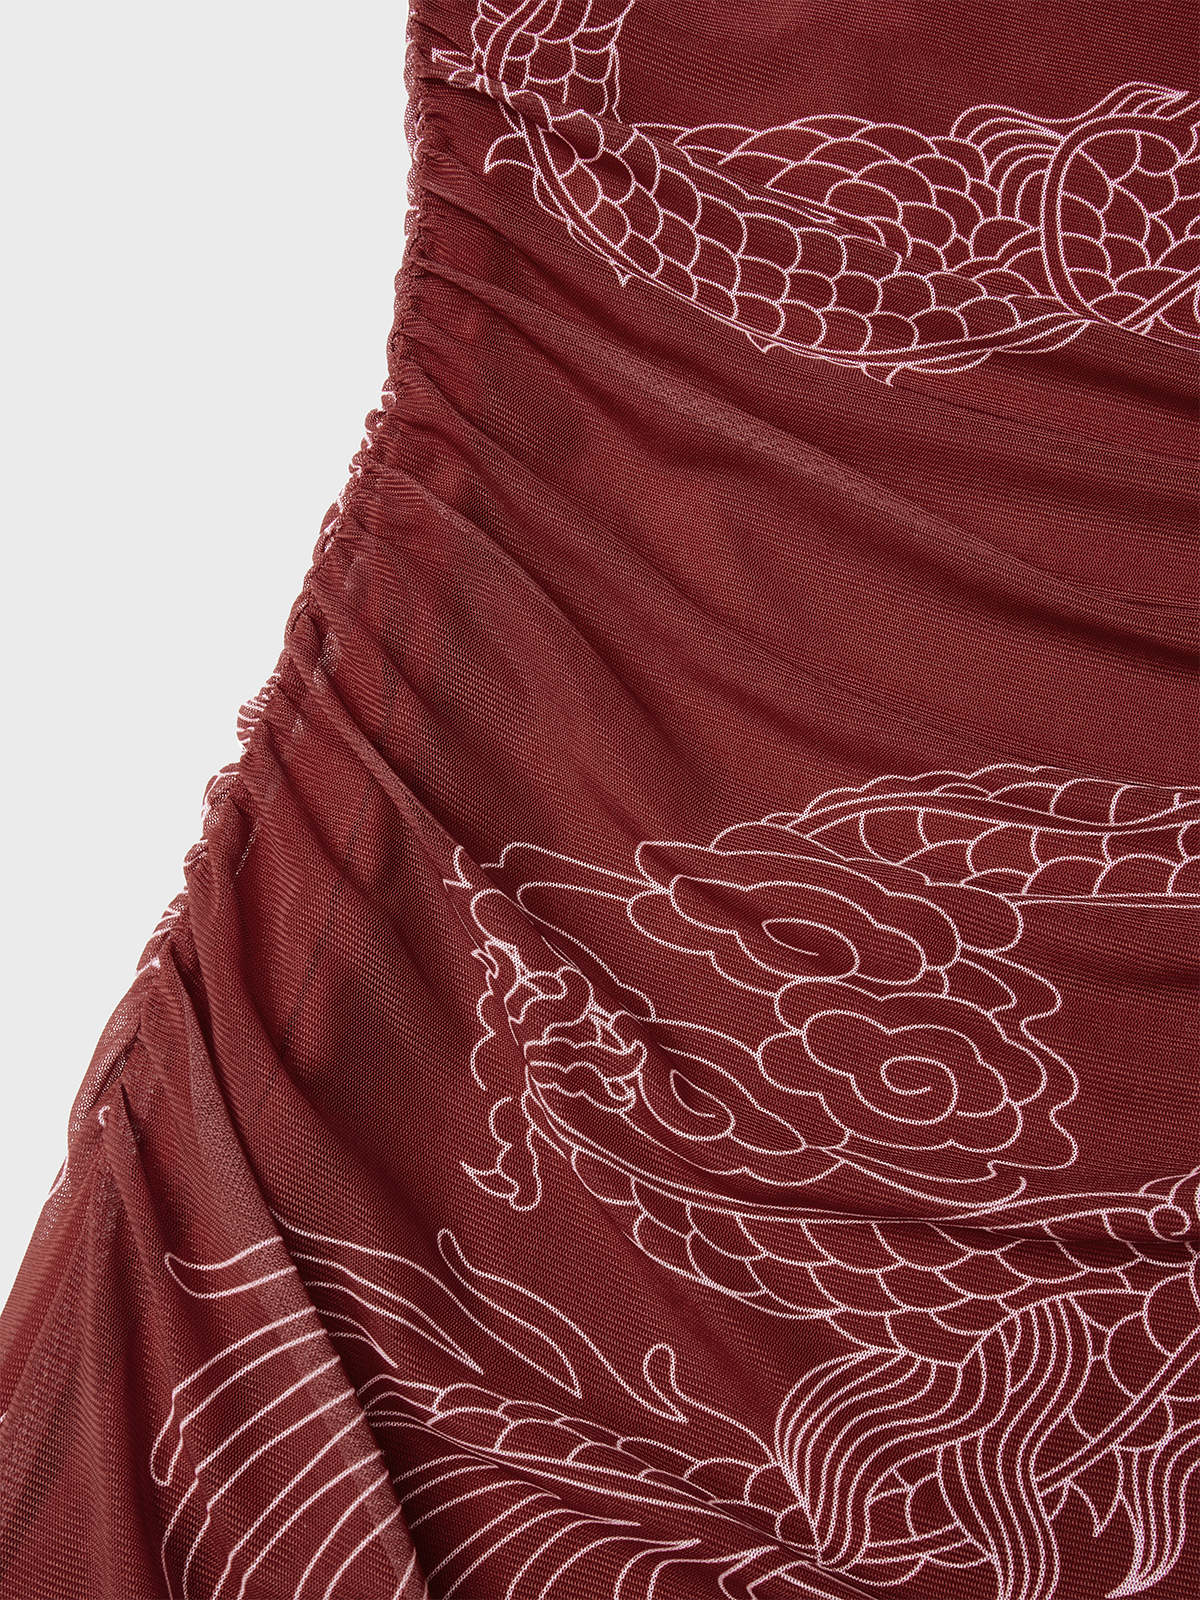 Asymmetrical Design Ruffles mesh Strapless Animal Picture Sleeveless Maxi Dress